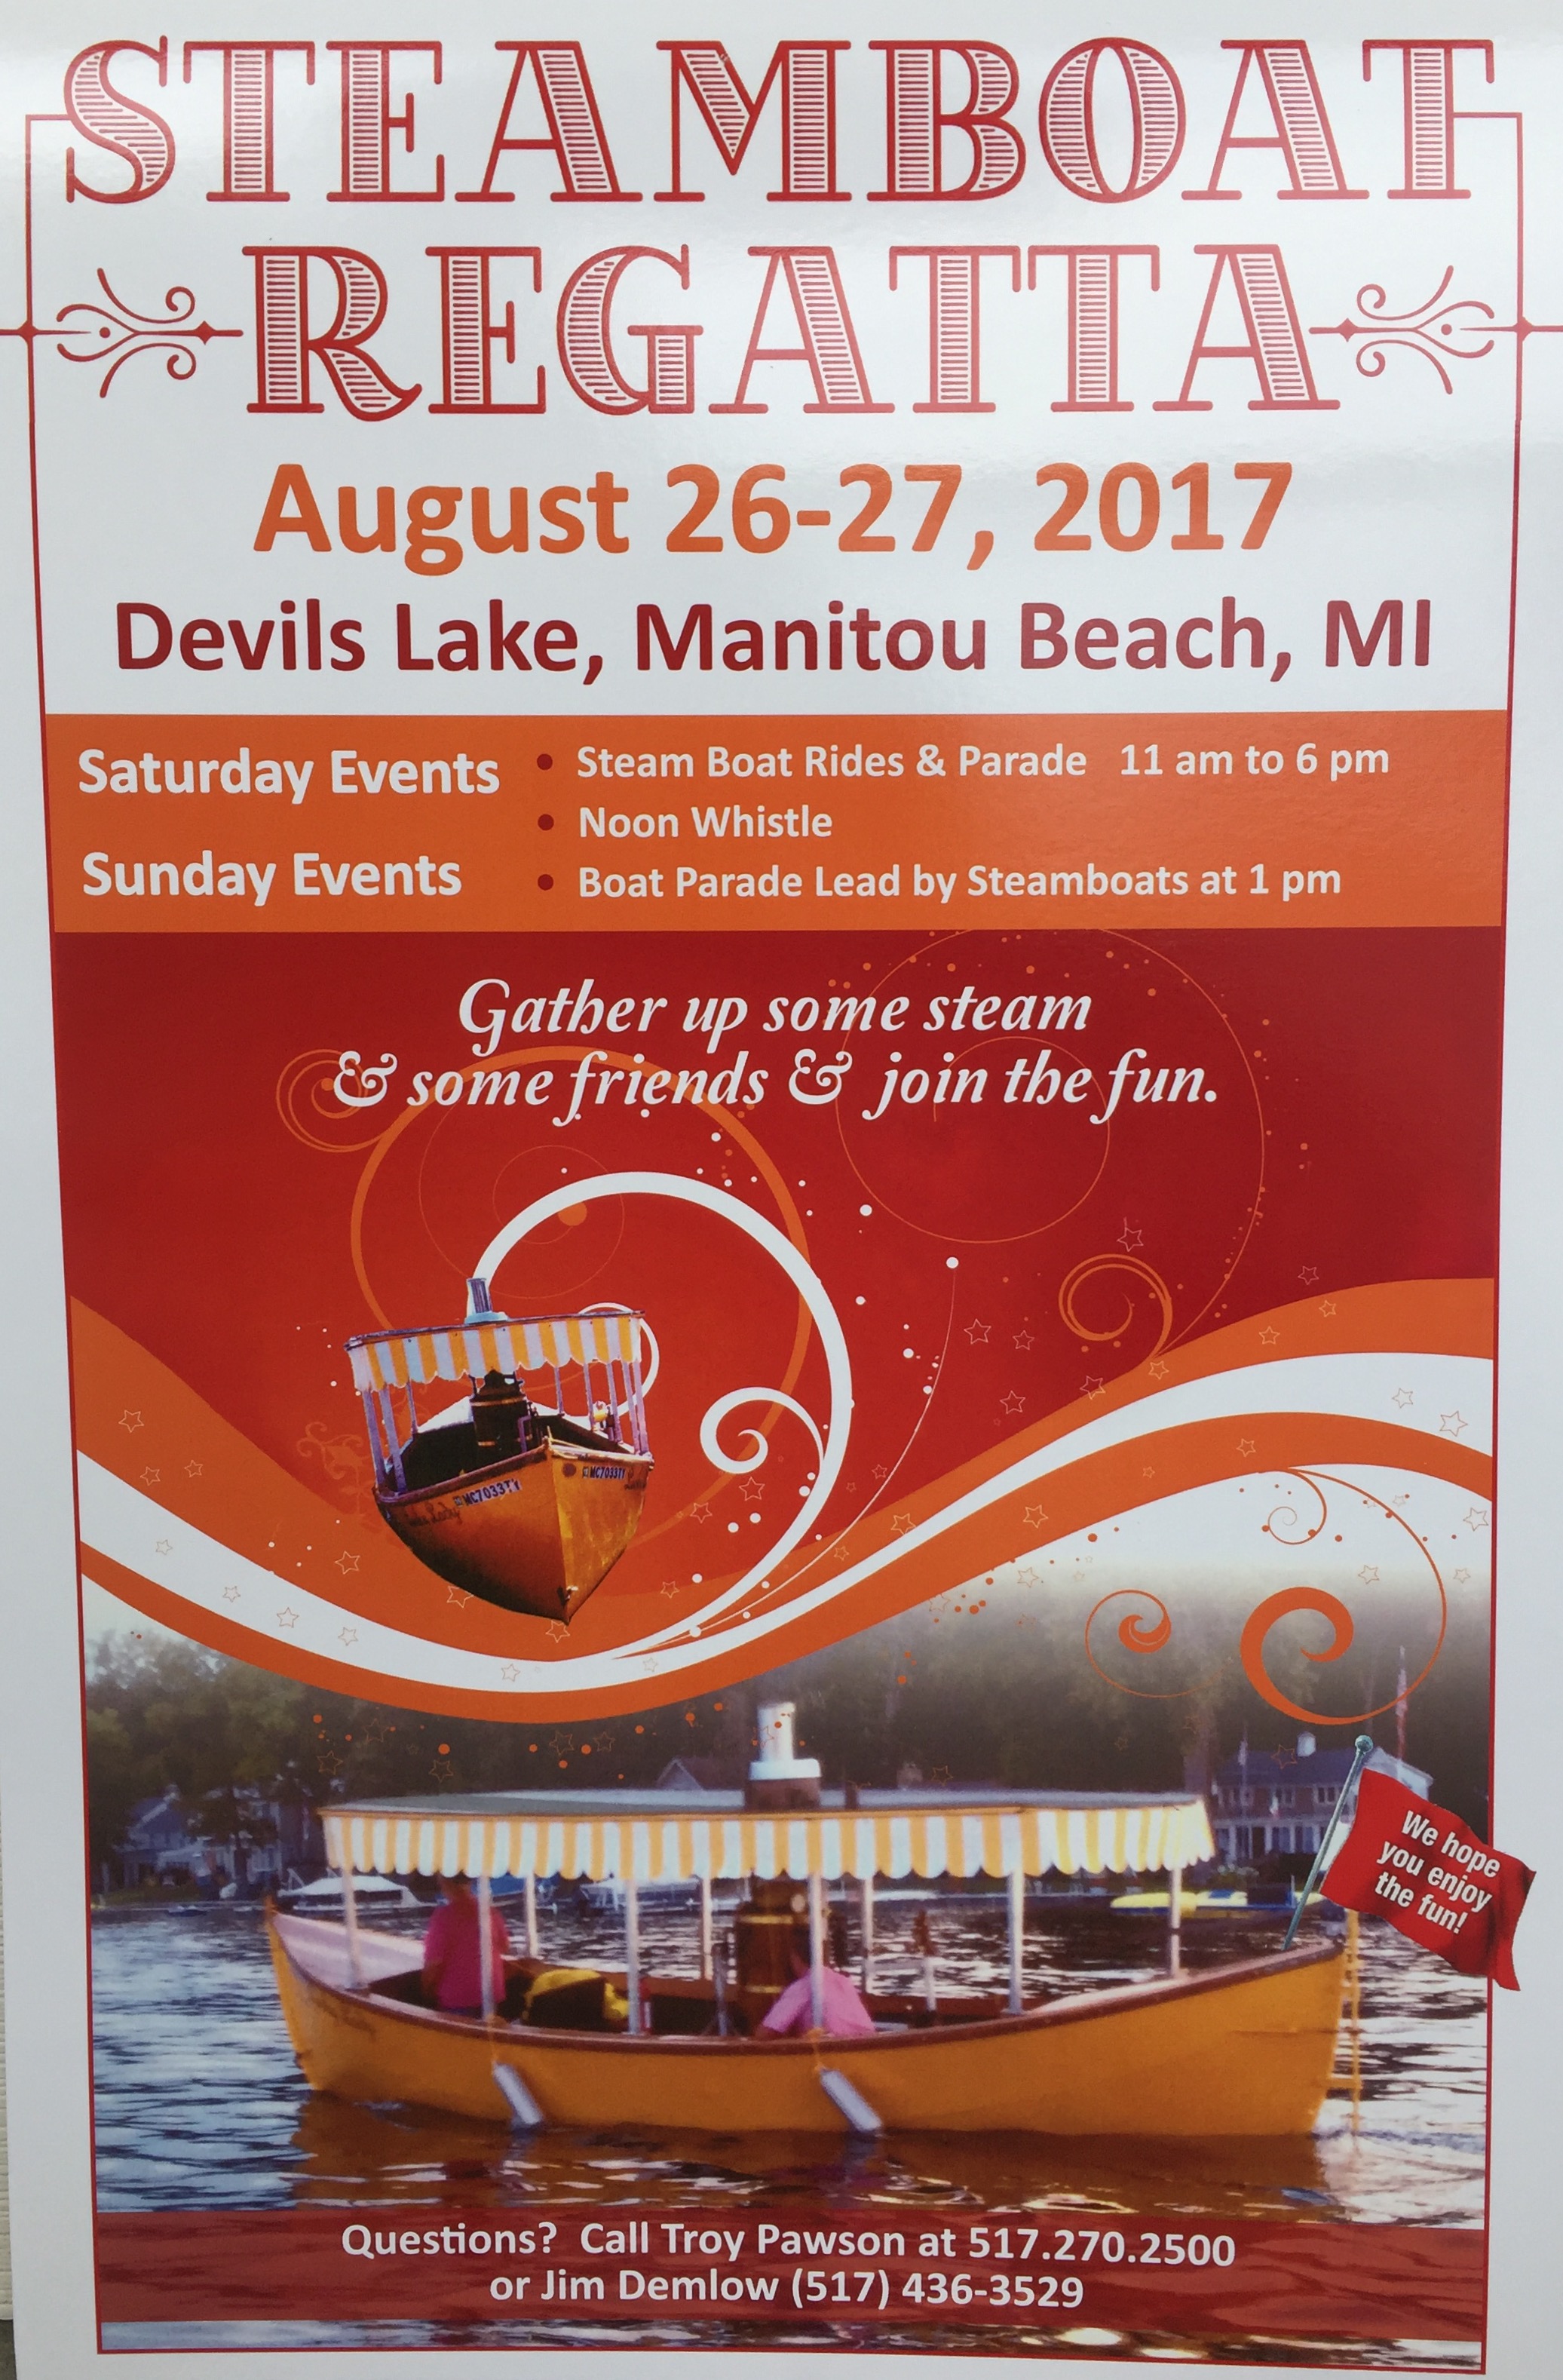 Steamboat Regatta 2017 - August 26-27